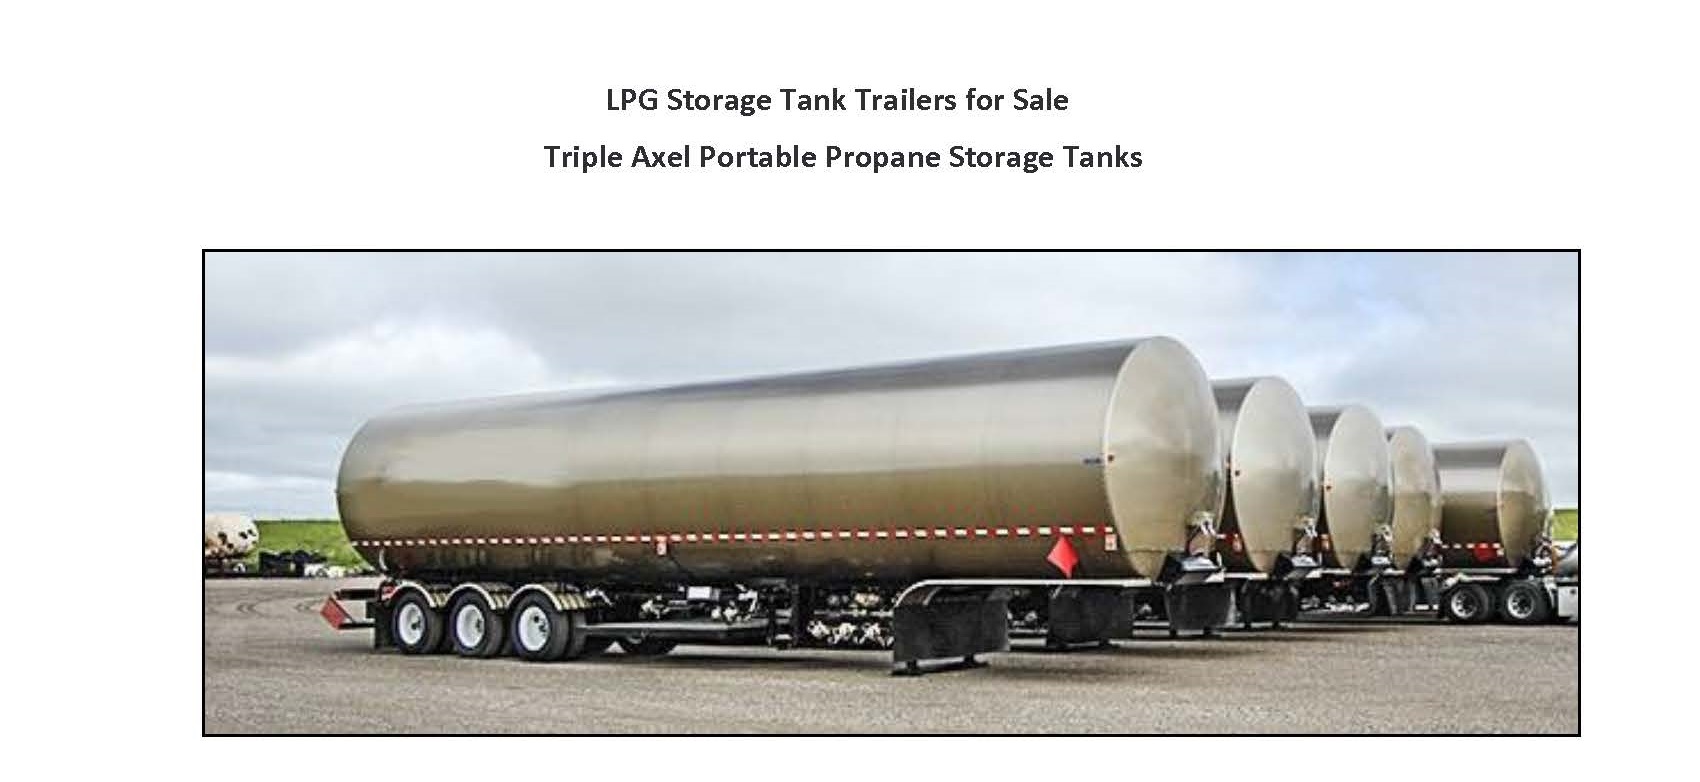 23300 US Gal portable LPG /Propane Storage Tank Trailers